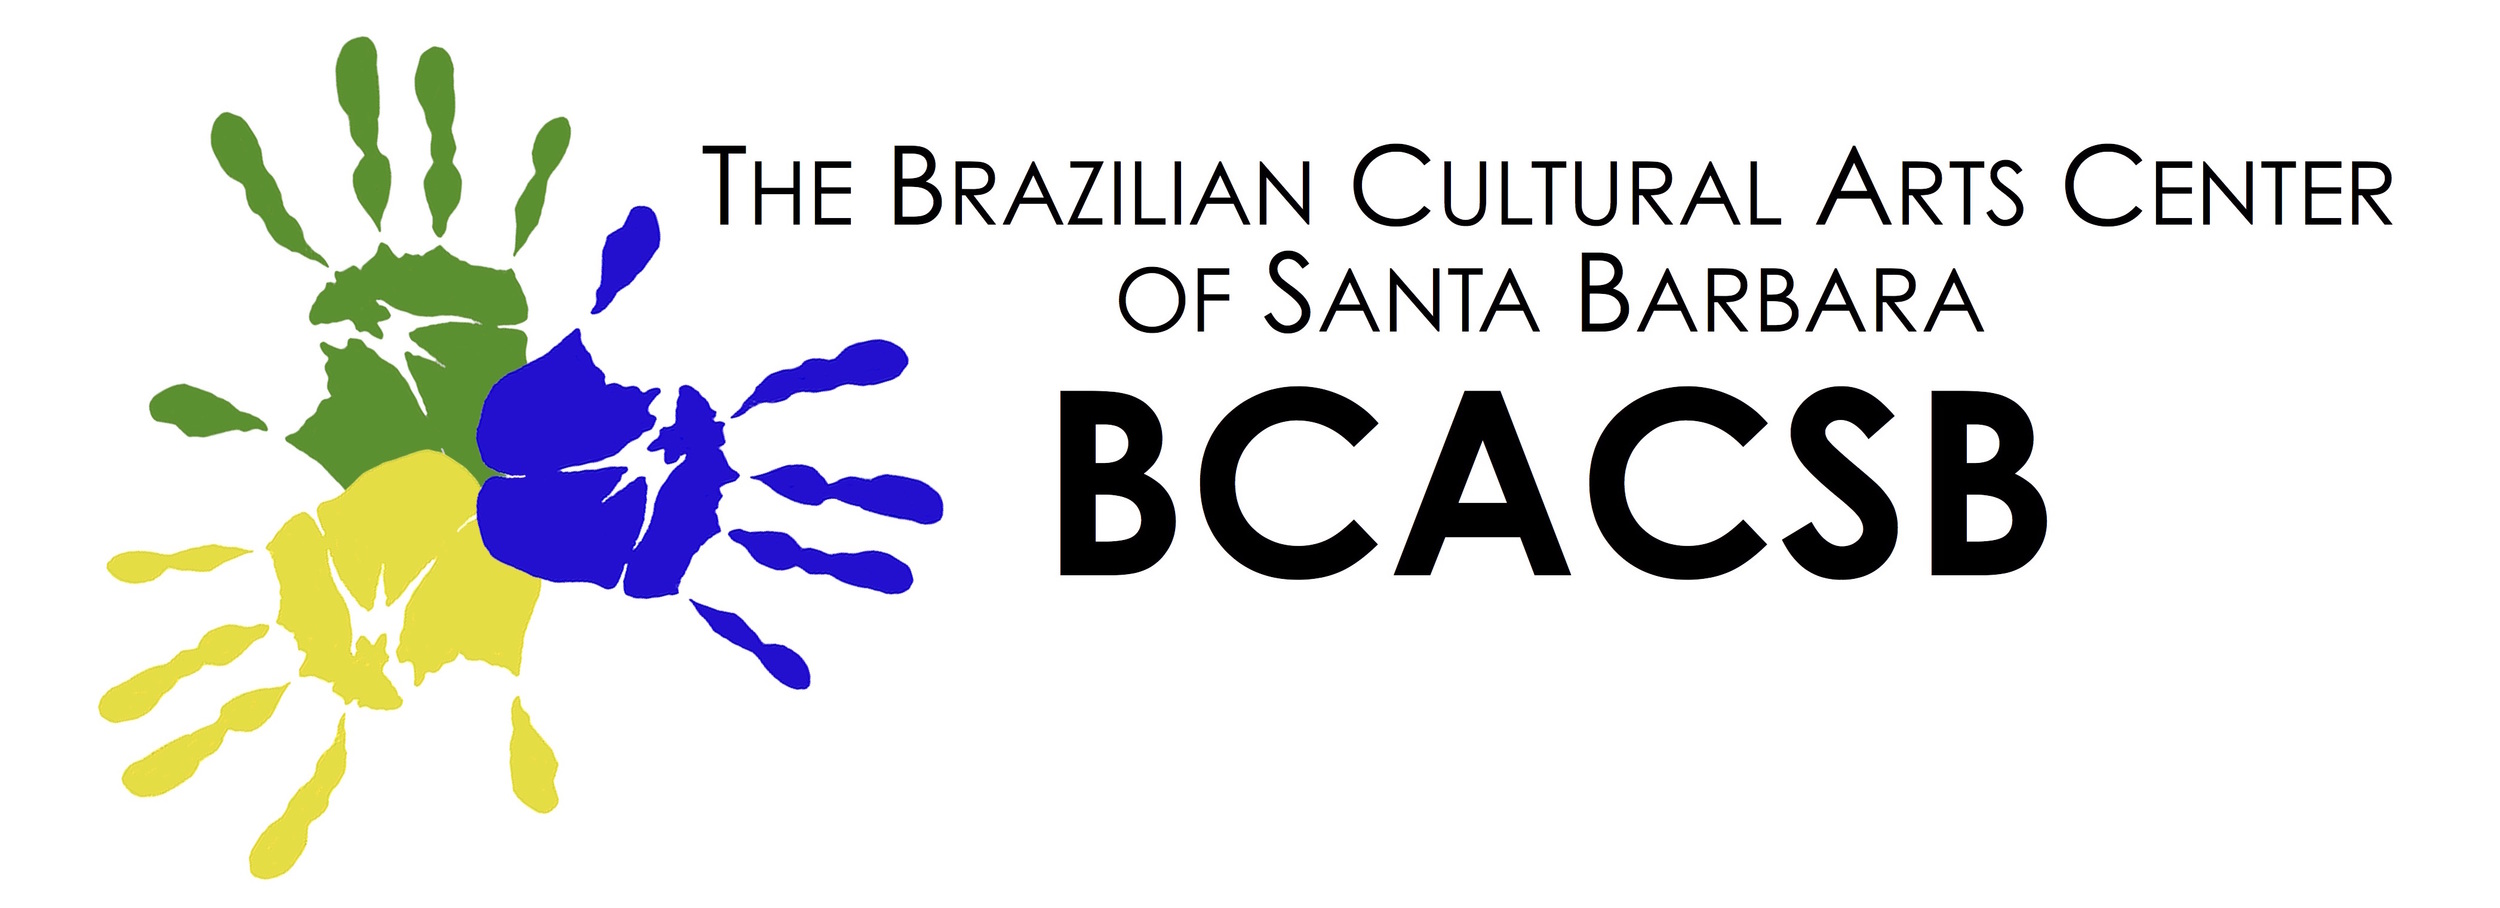 The Brazilian Cultural Arts Center of Santa Barbara